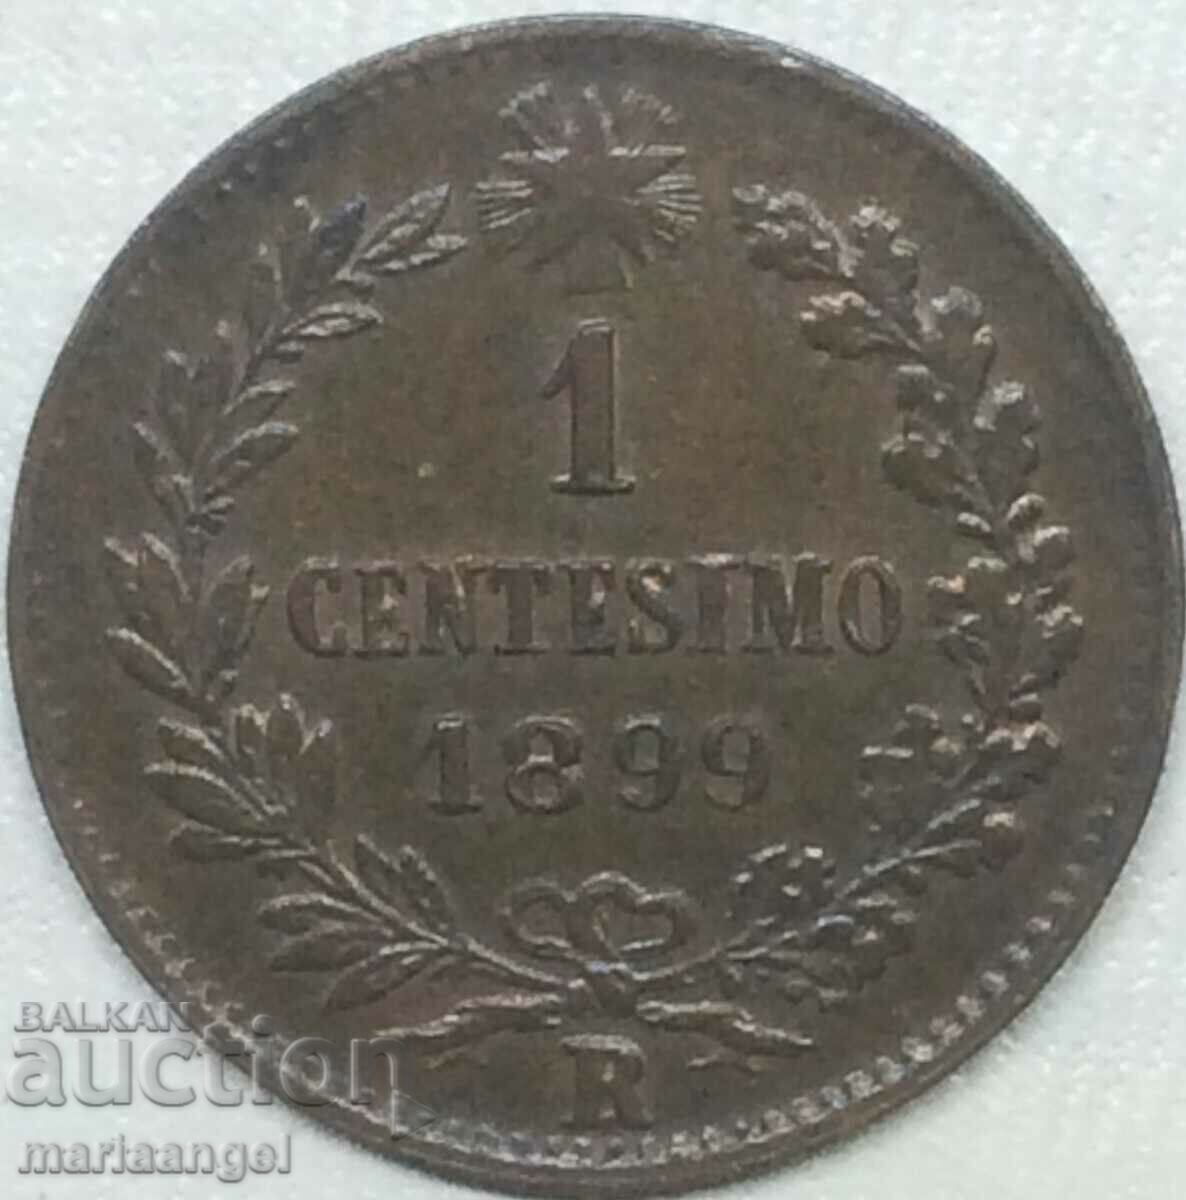 1 centesimo 1899 Italia Umberto I - rar